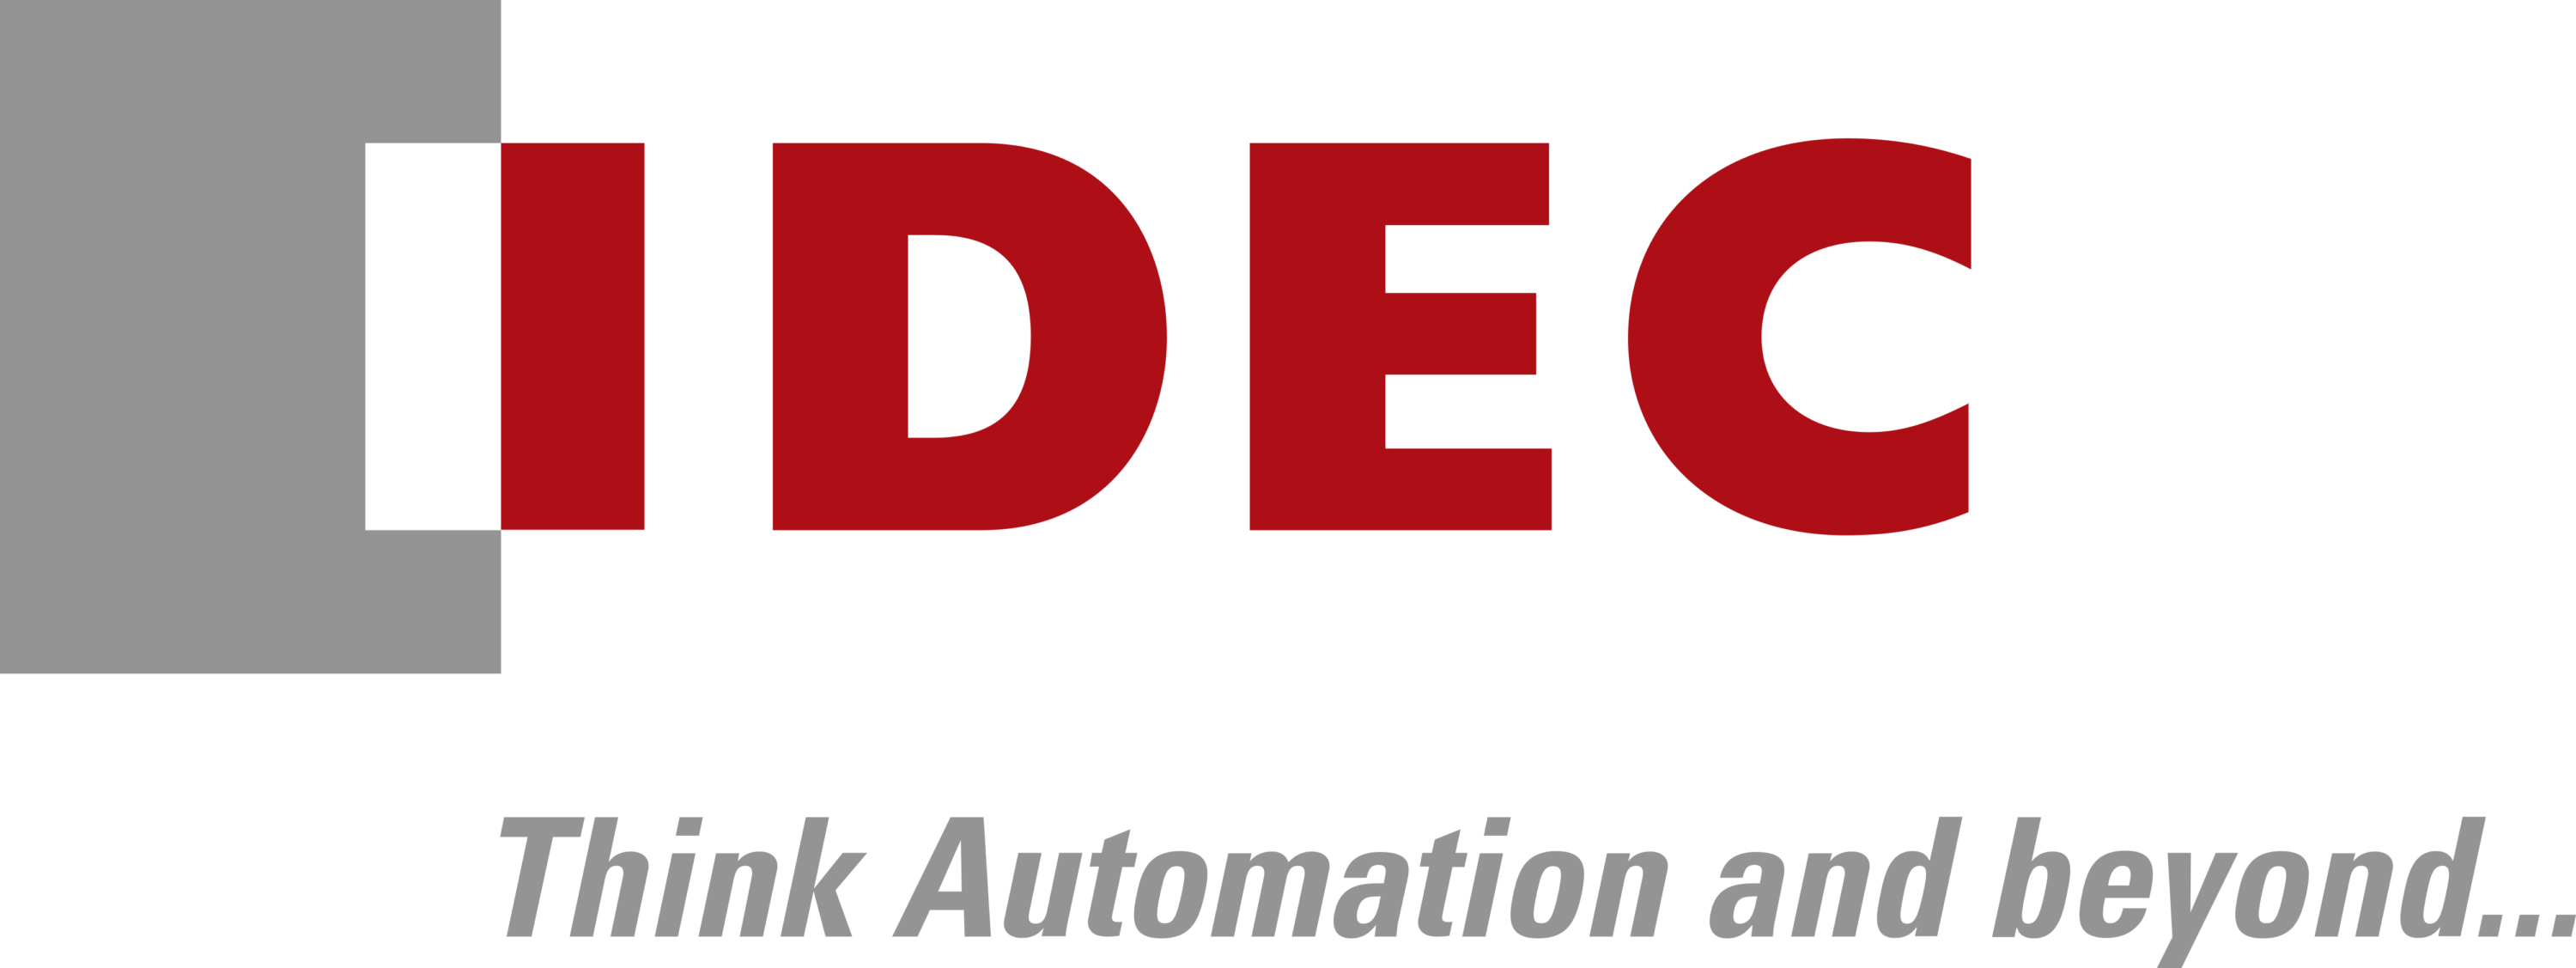 IDEC Corporation Logo